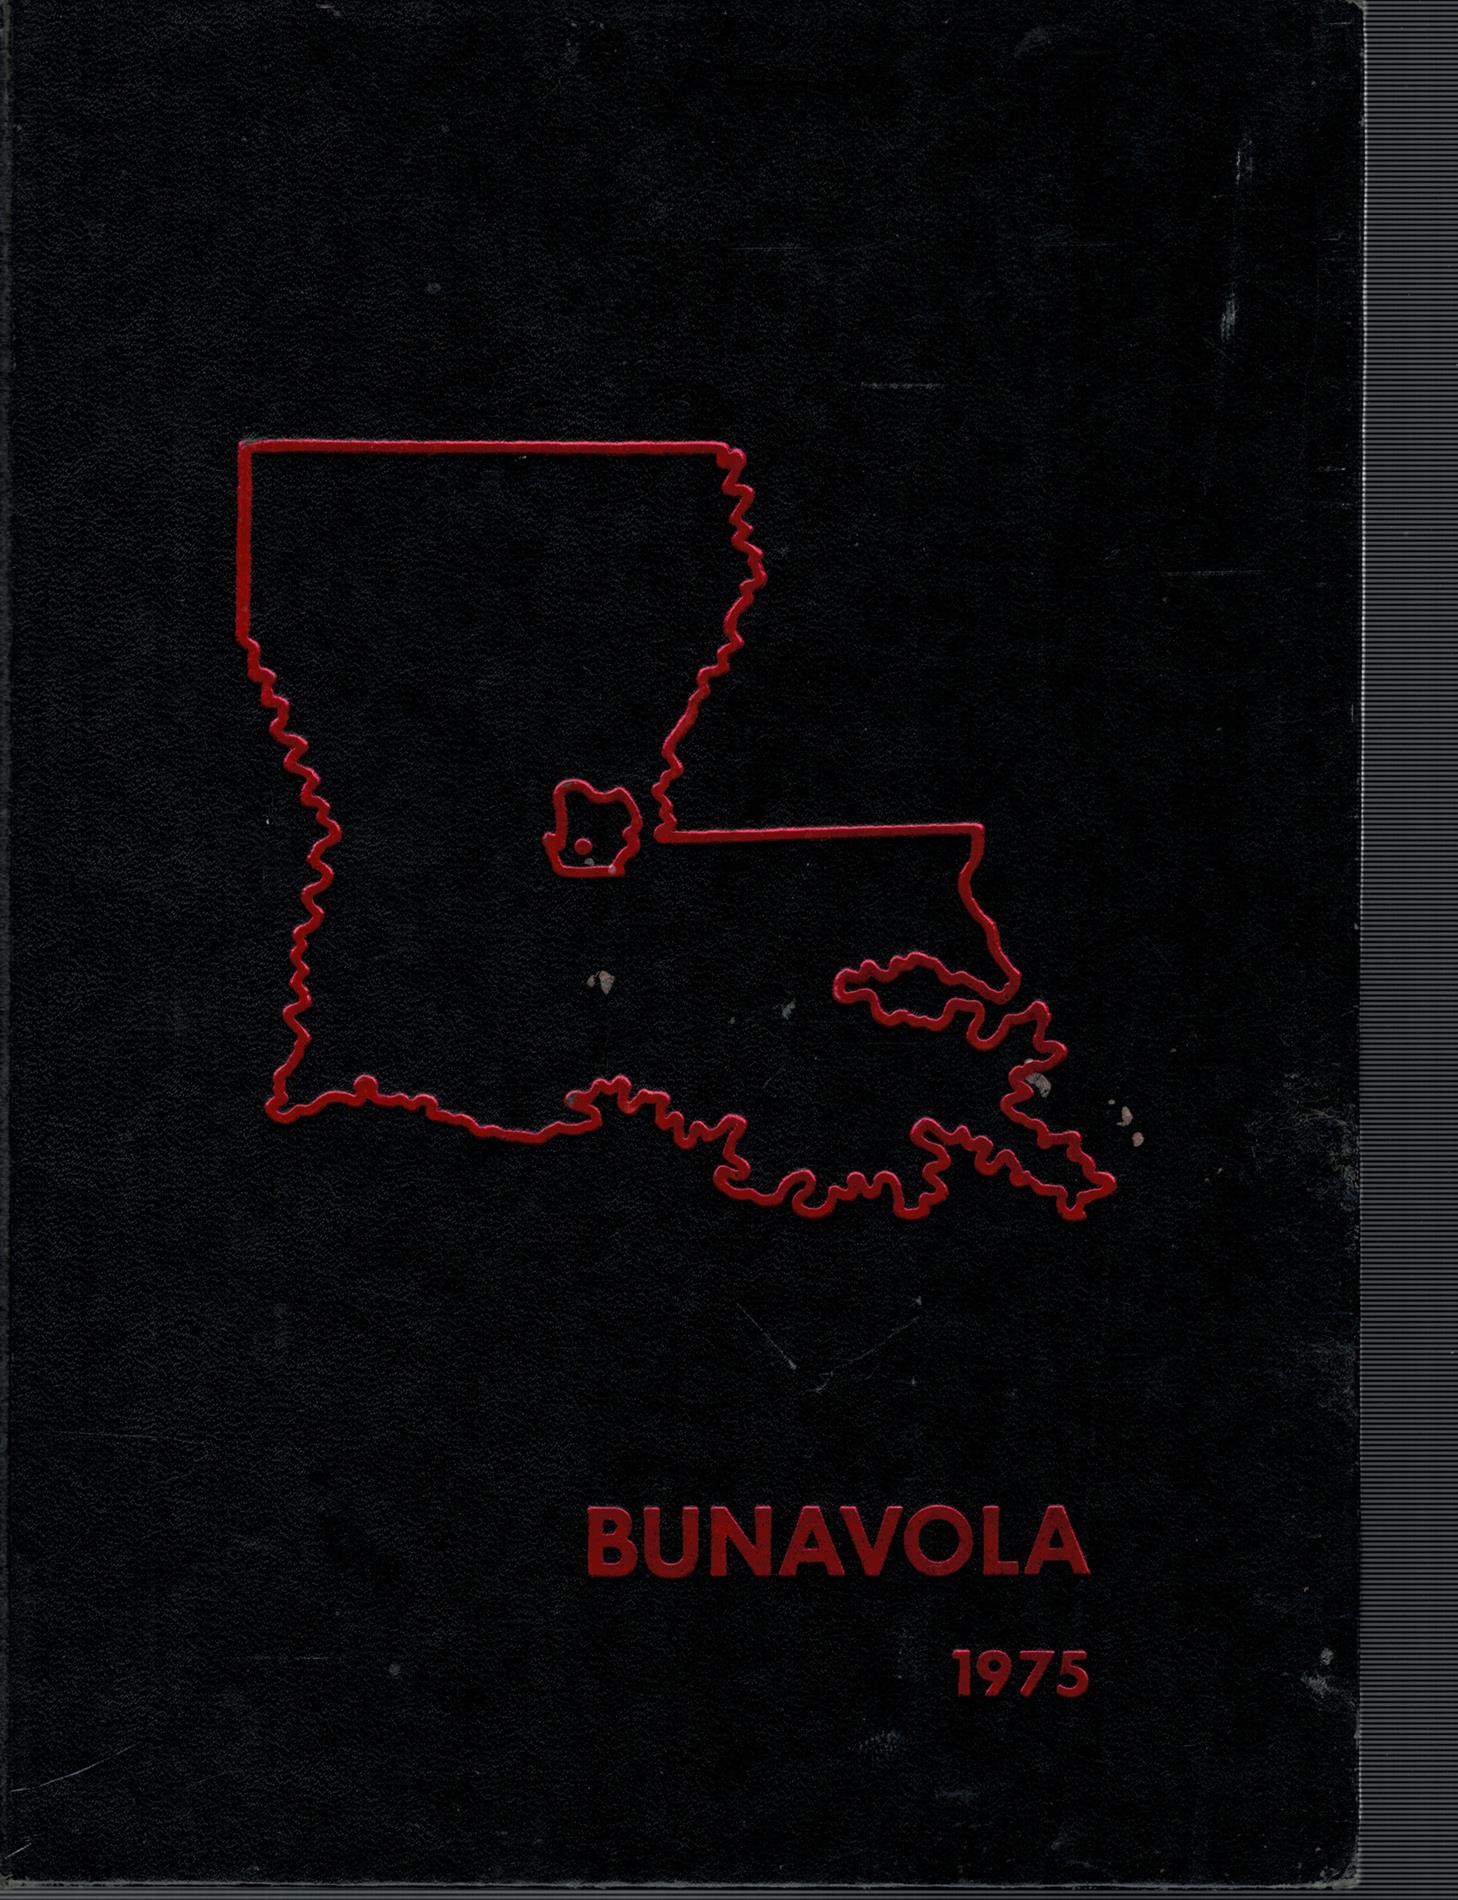 1975 Bunavola